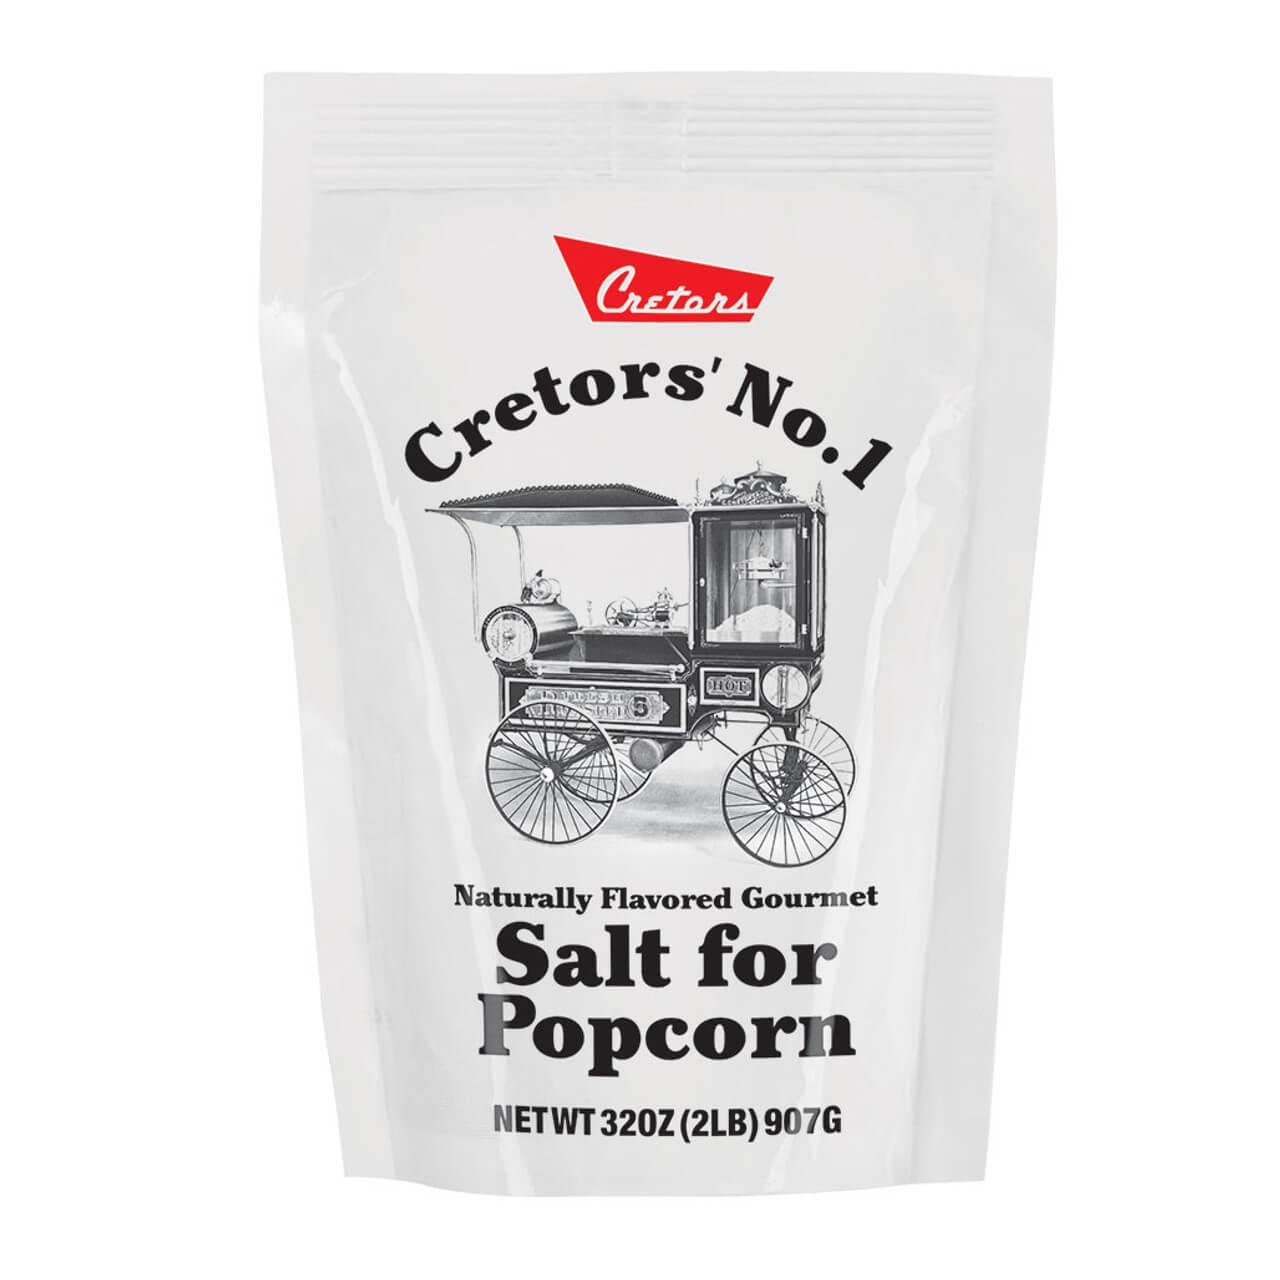 Cretors Original Butter Flavor Popcorn Salt 2.0 lb bag 12/case